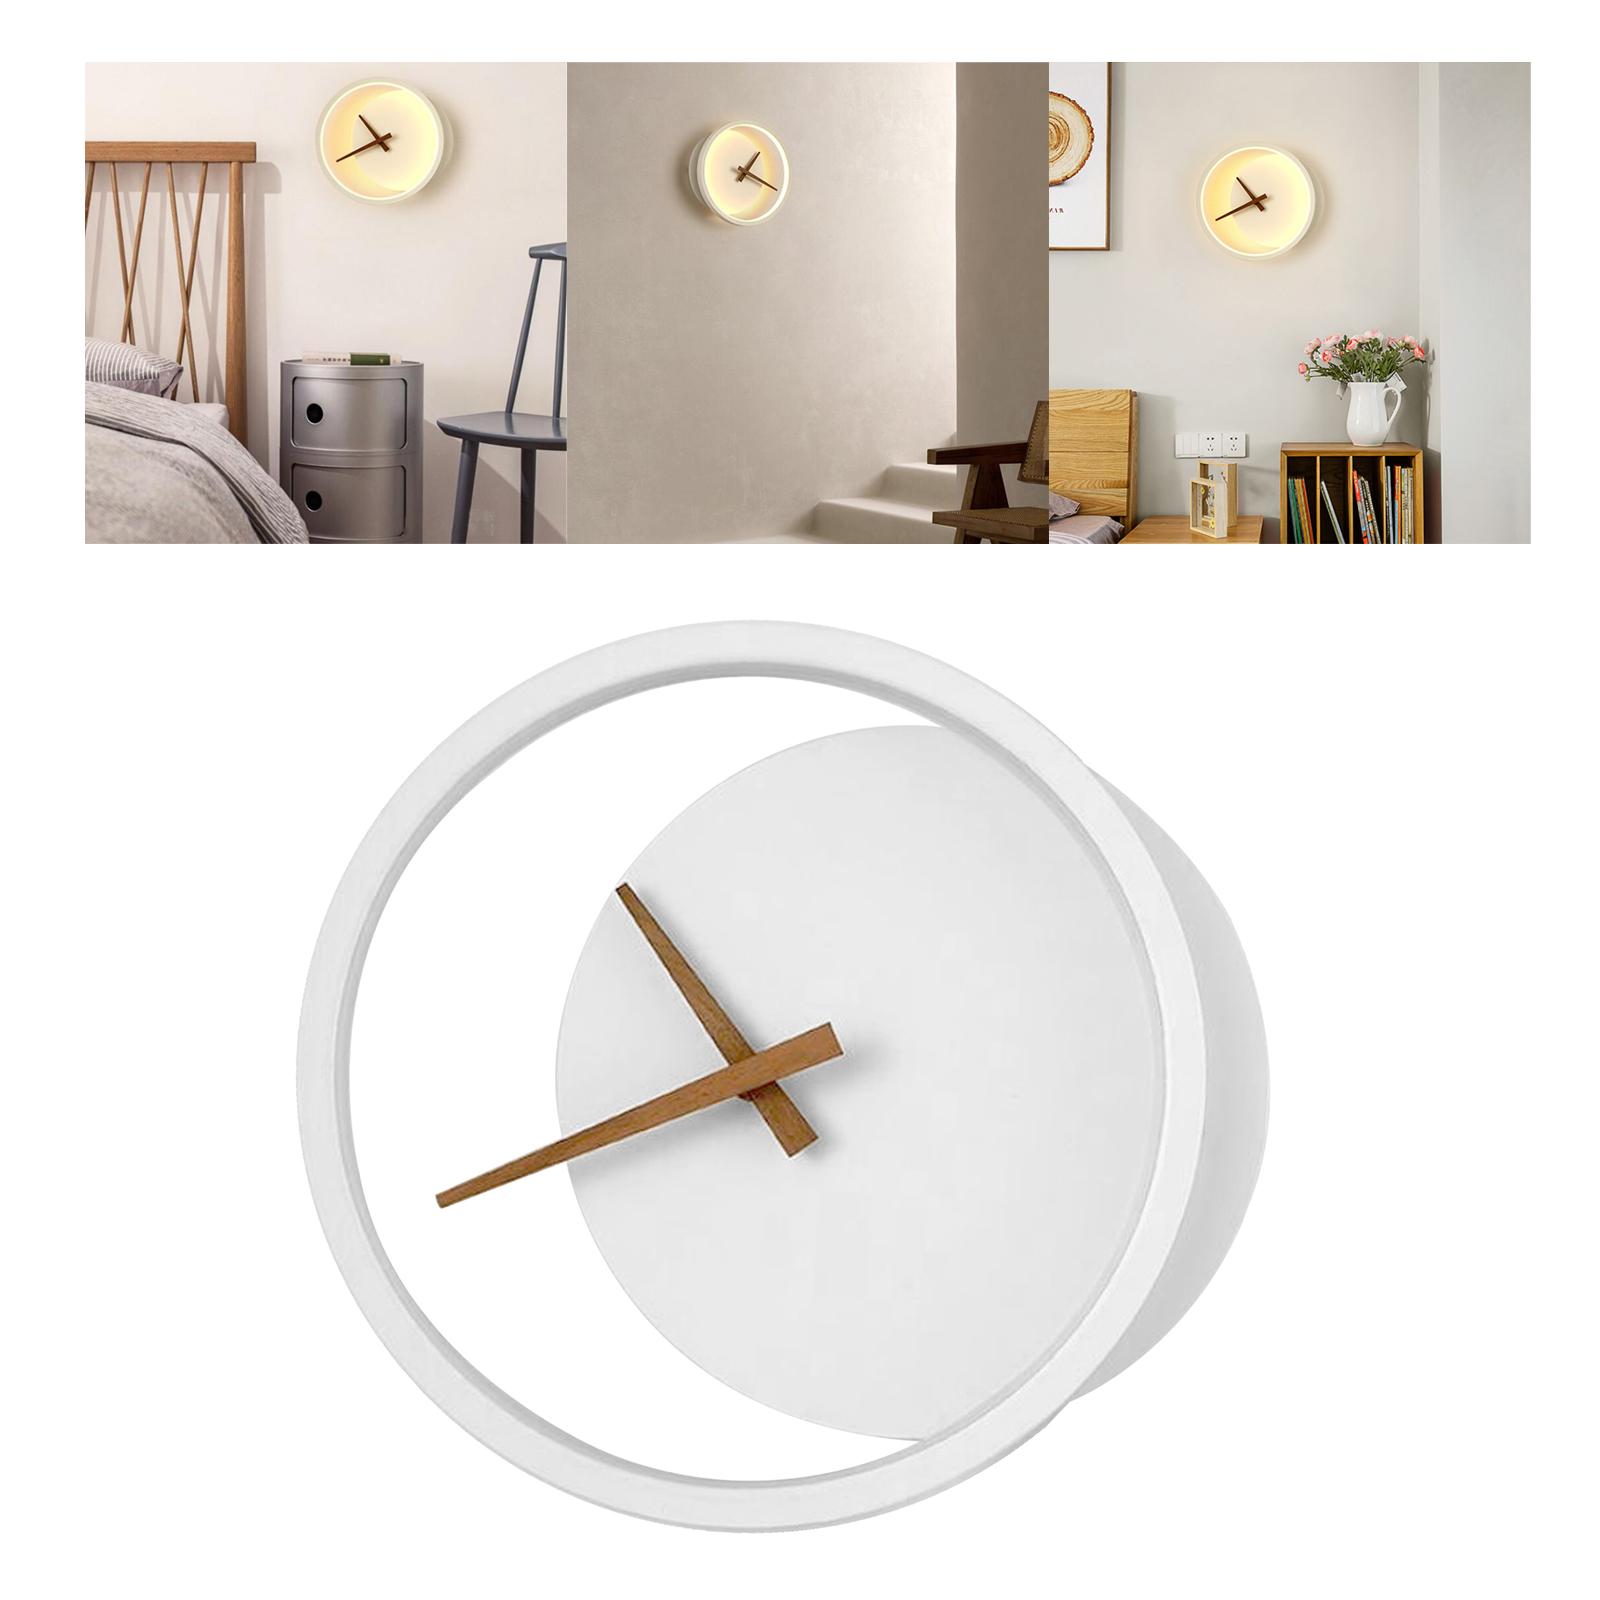 Minimalist Clock Wall Light Wall Art Decor for Home Office Decor White